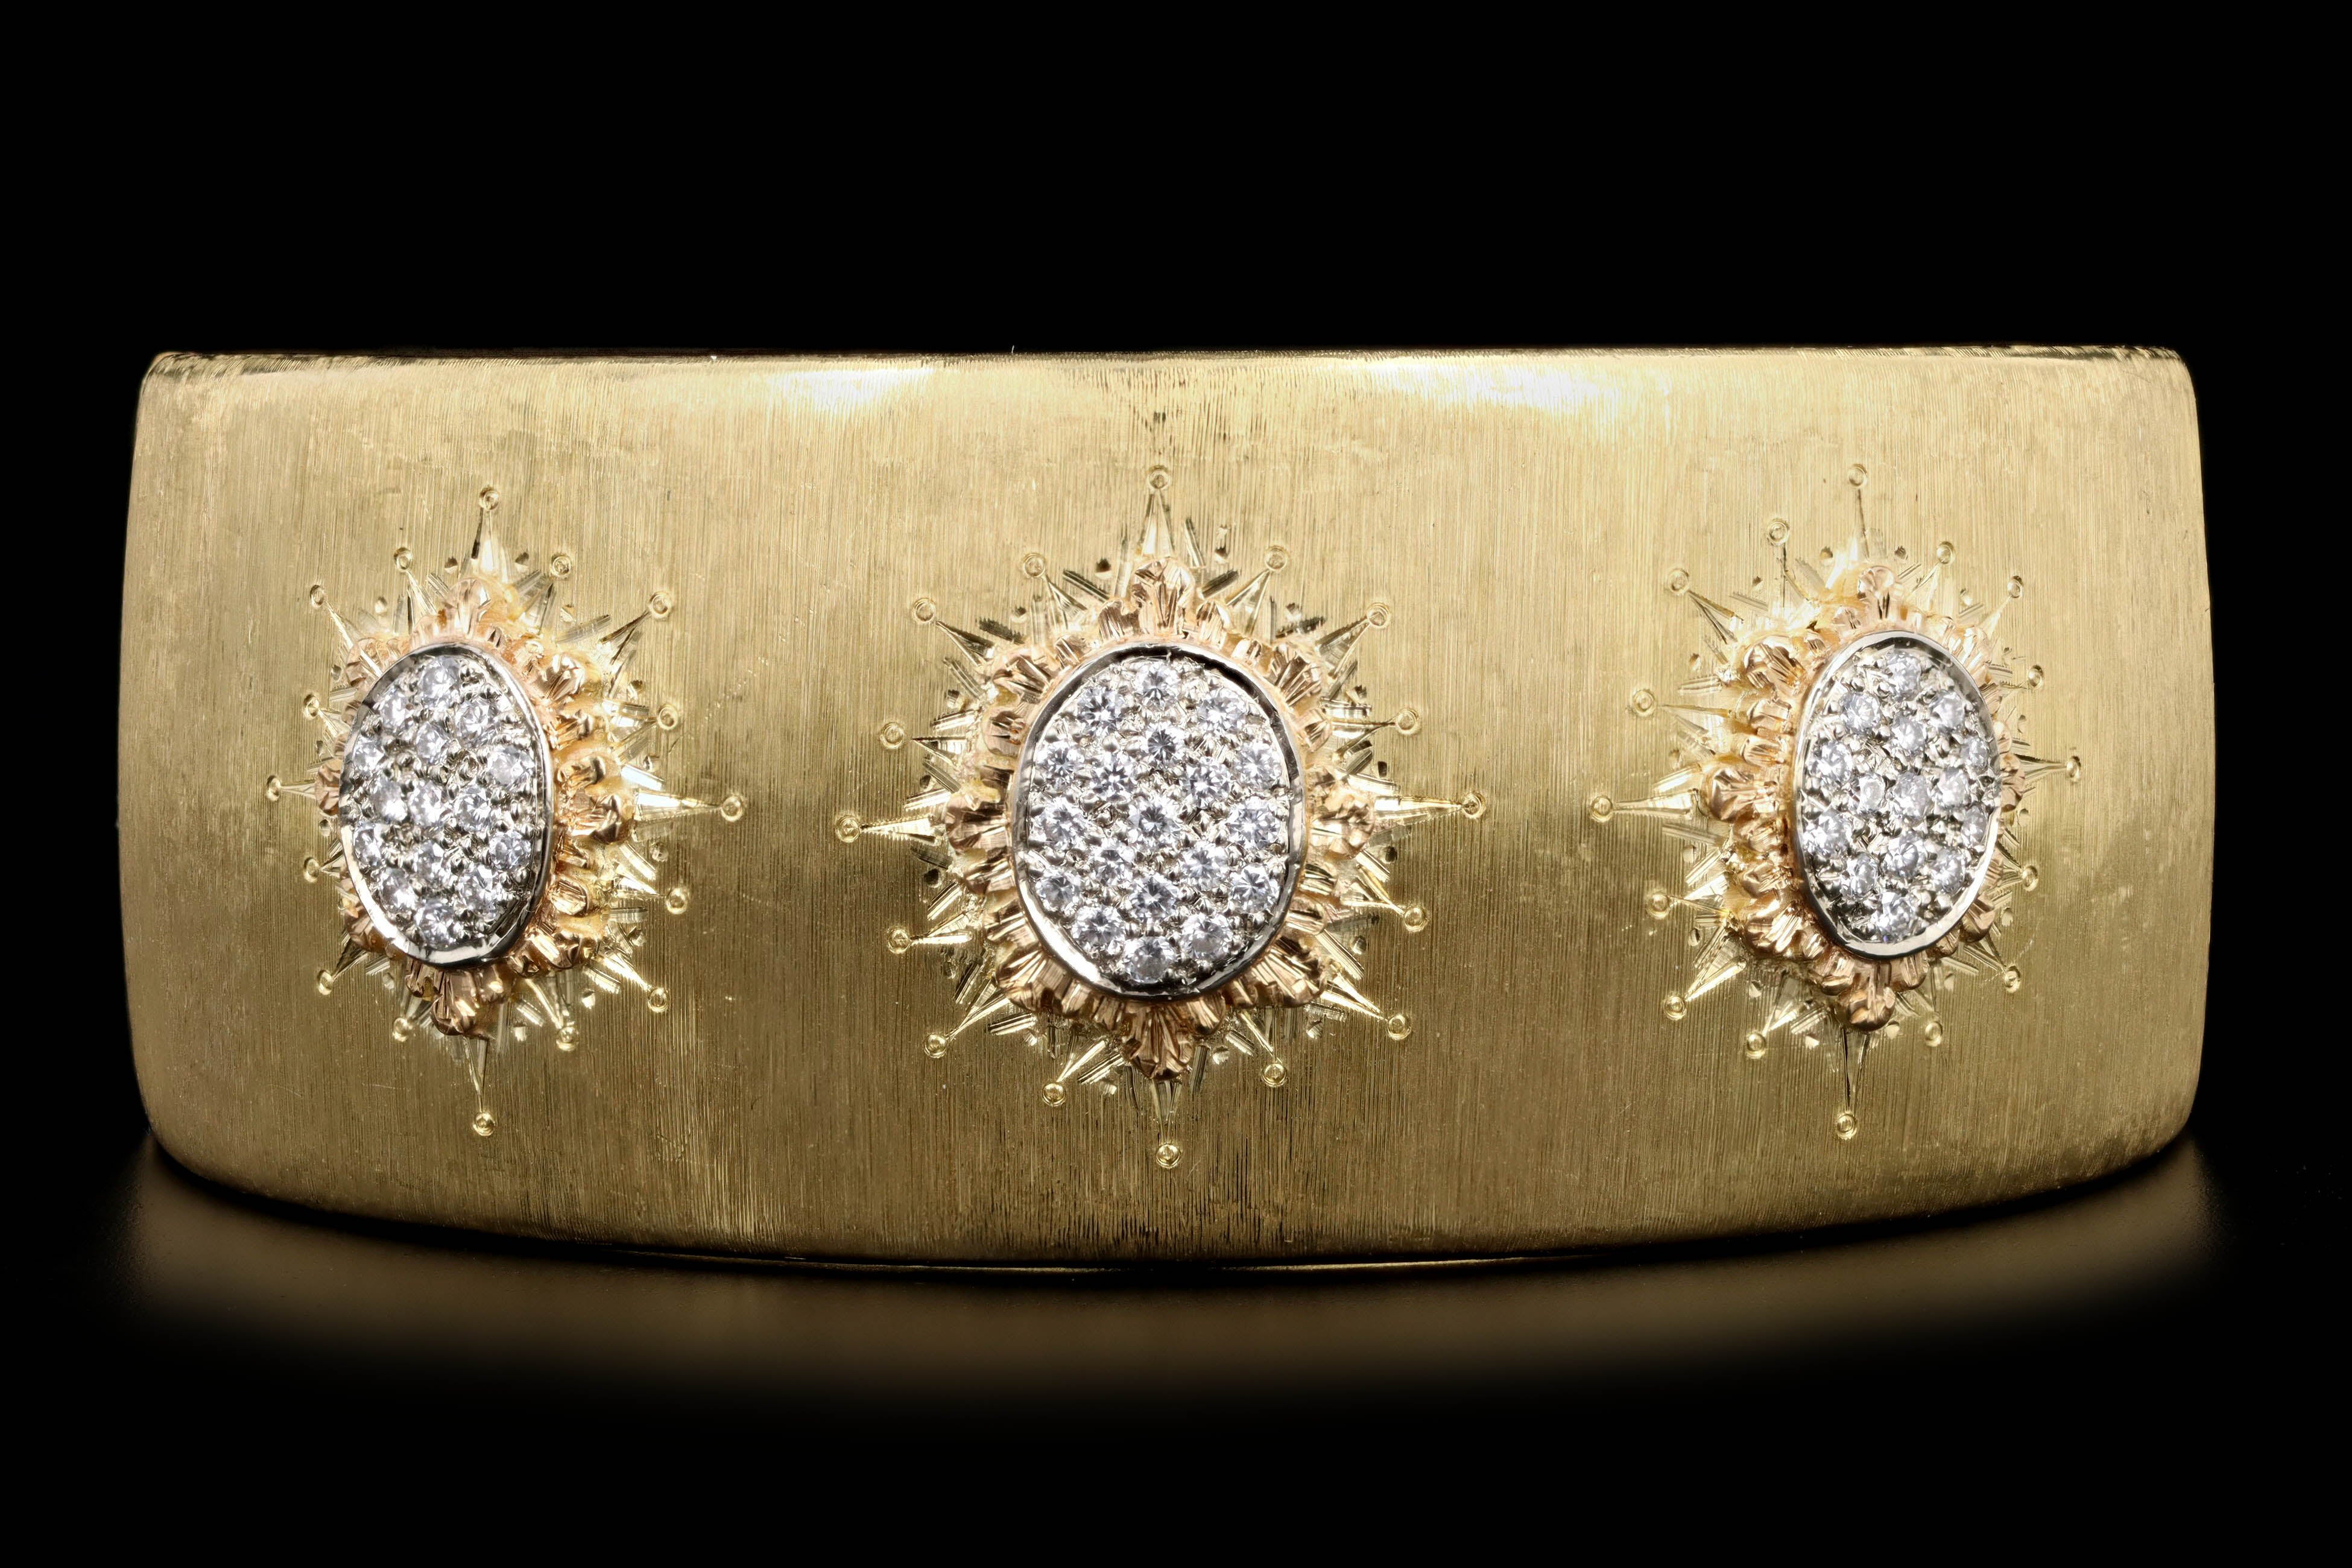 Buccellati 18K Gold and Silver Sapphire Diamond Bracelet